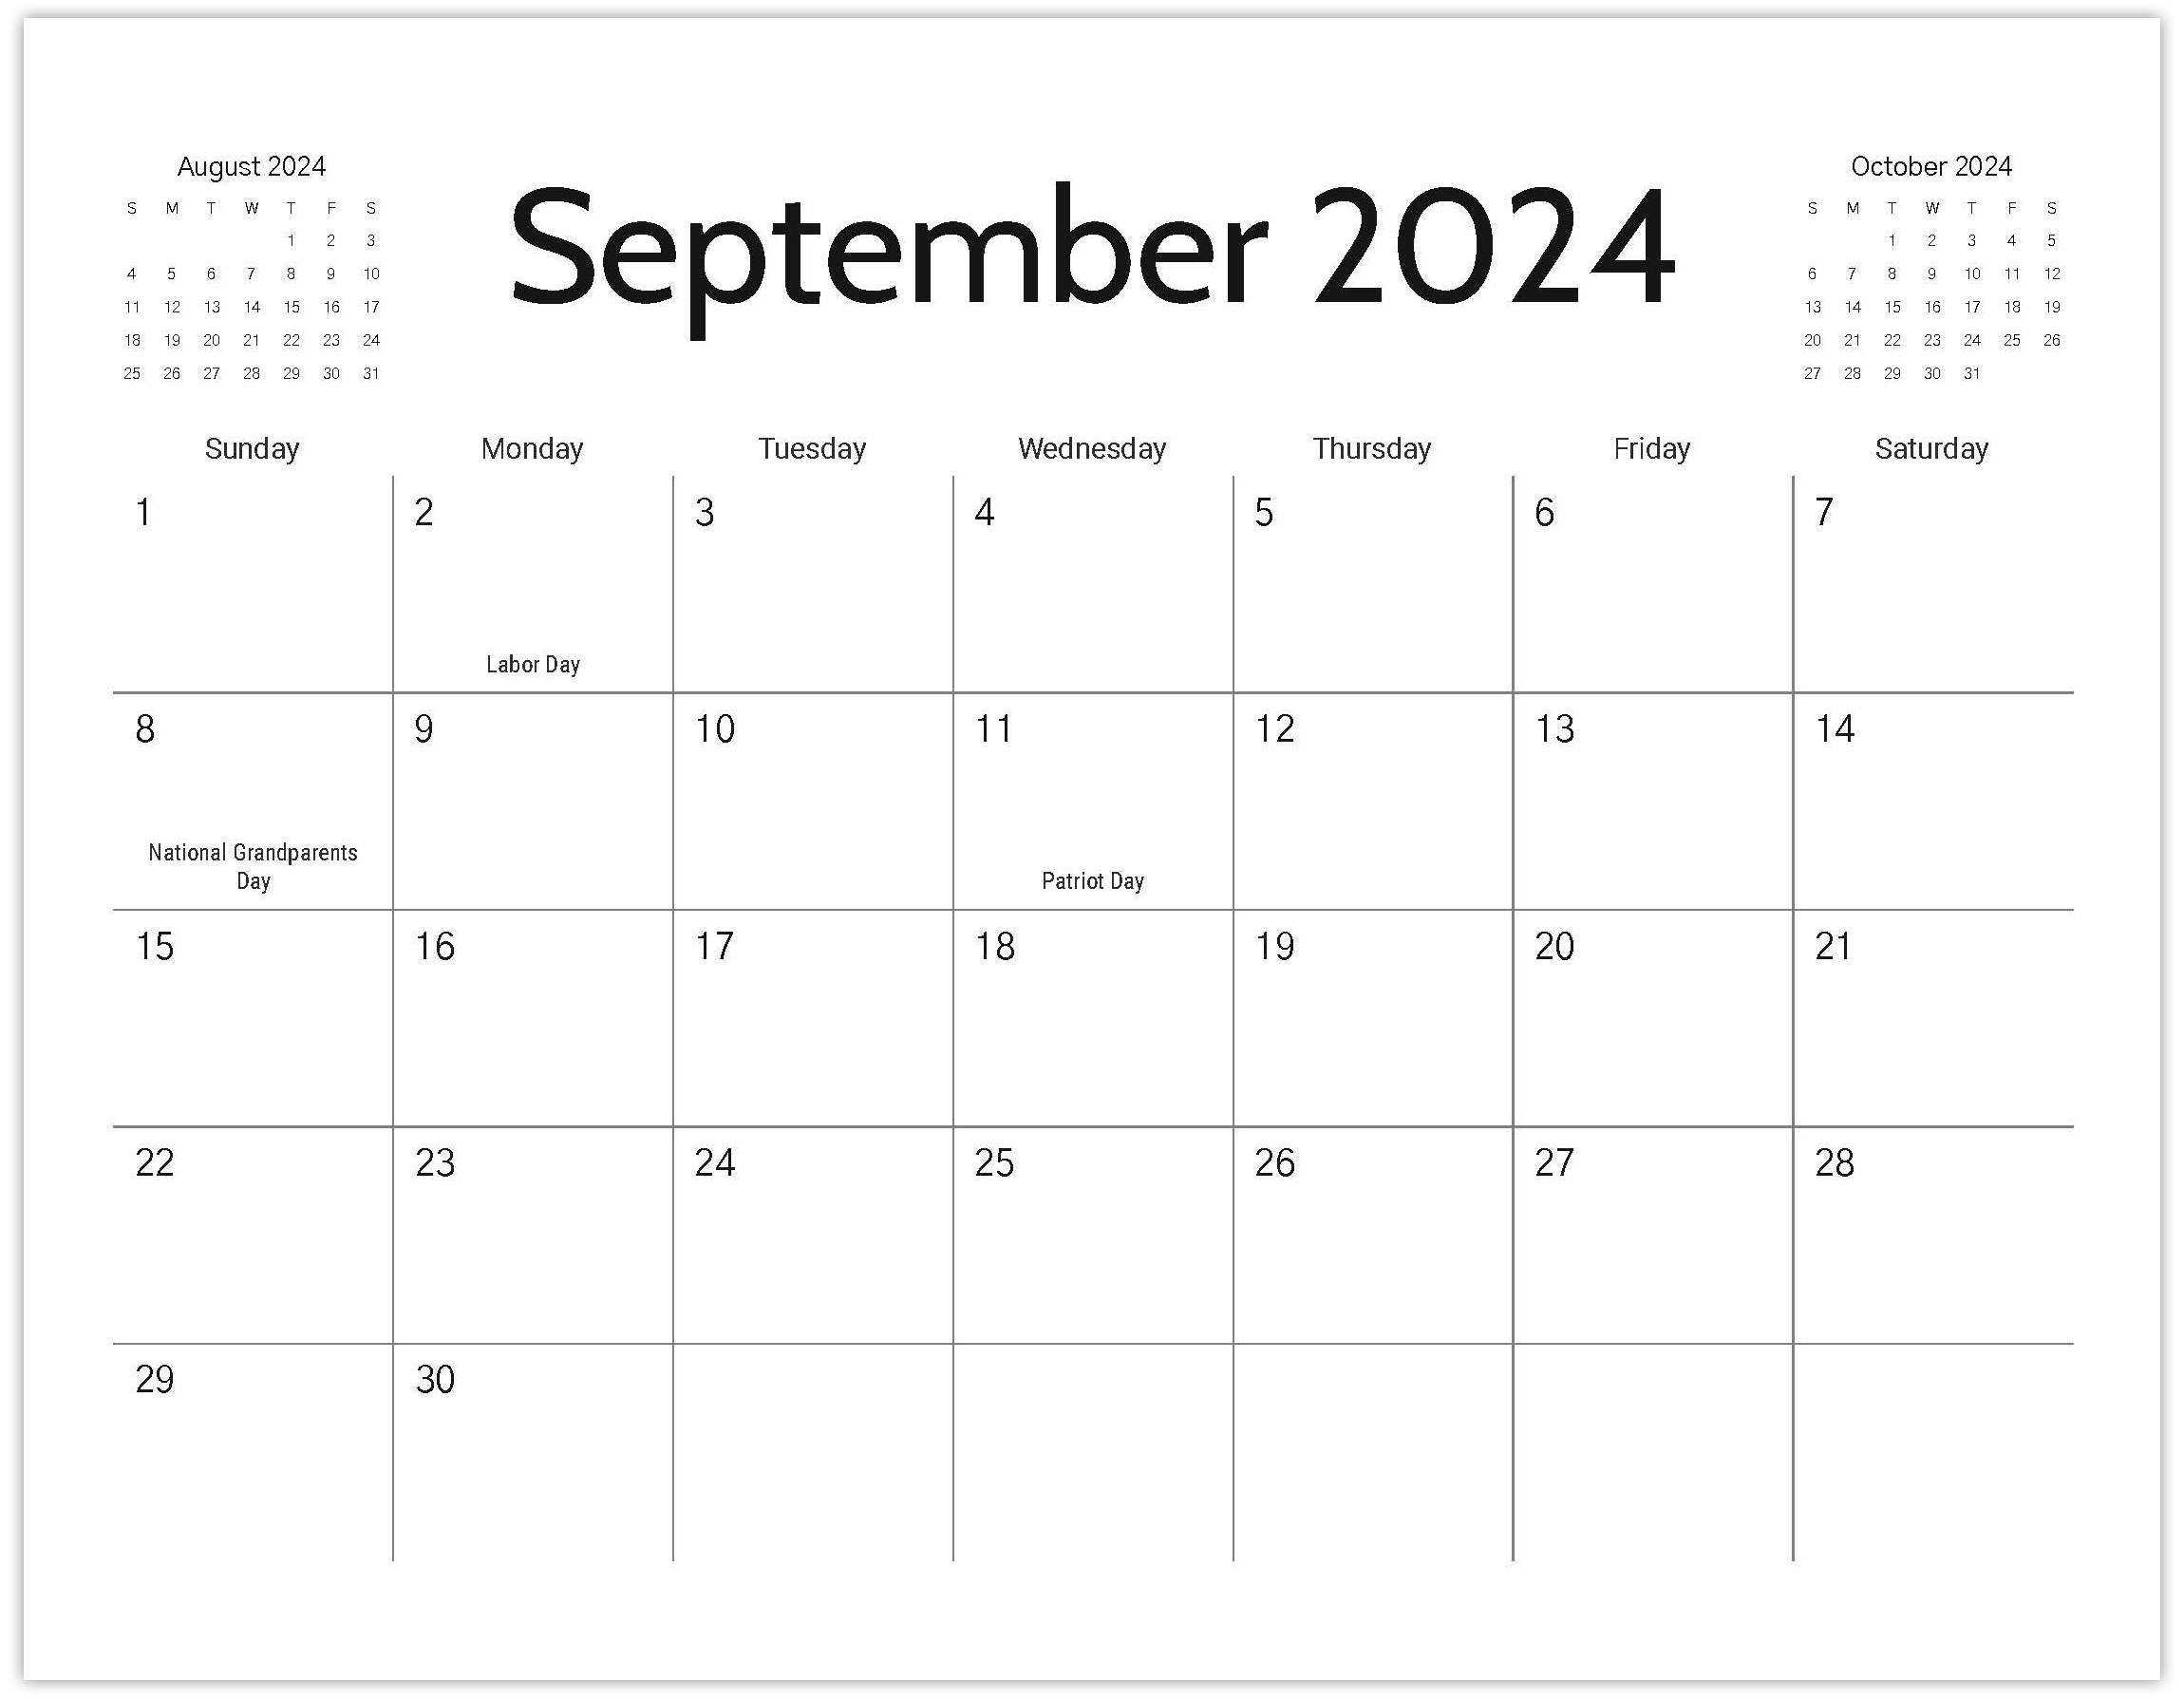 Free Printable Calendar 2024 | 2024 Printable Calendar By Month With Holidays